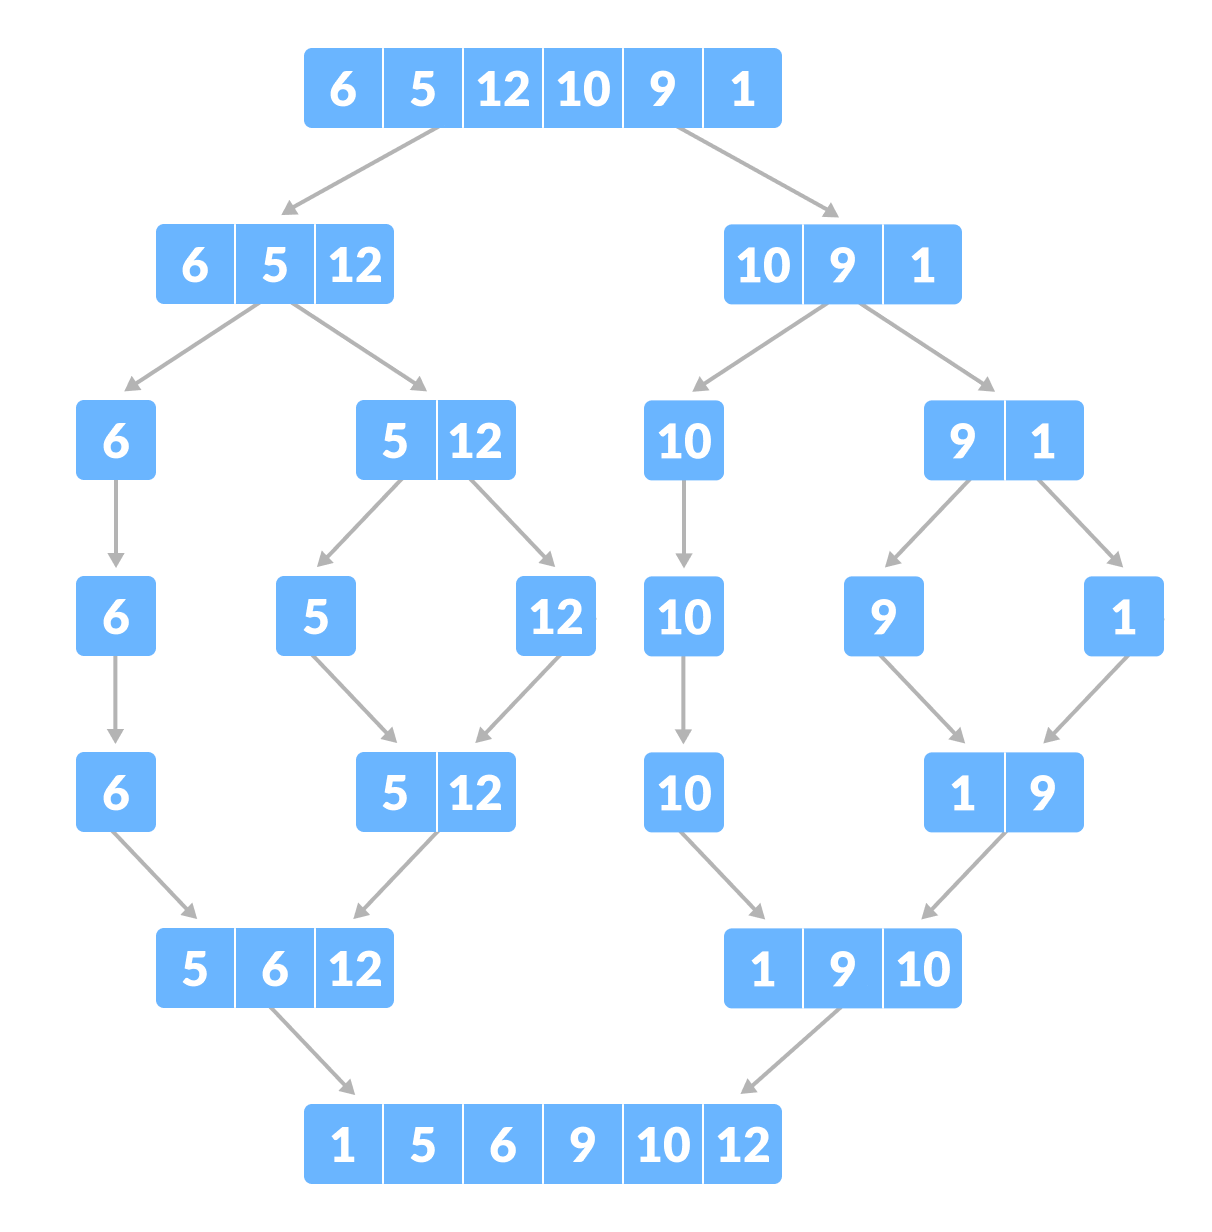 merge sort example